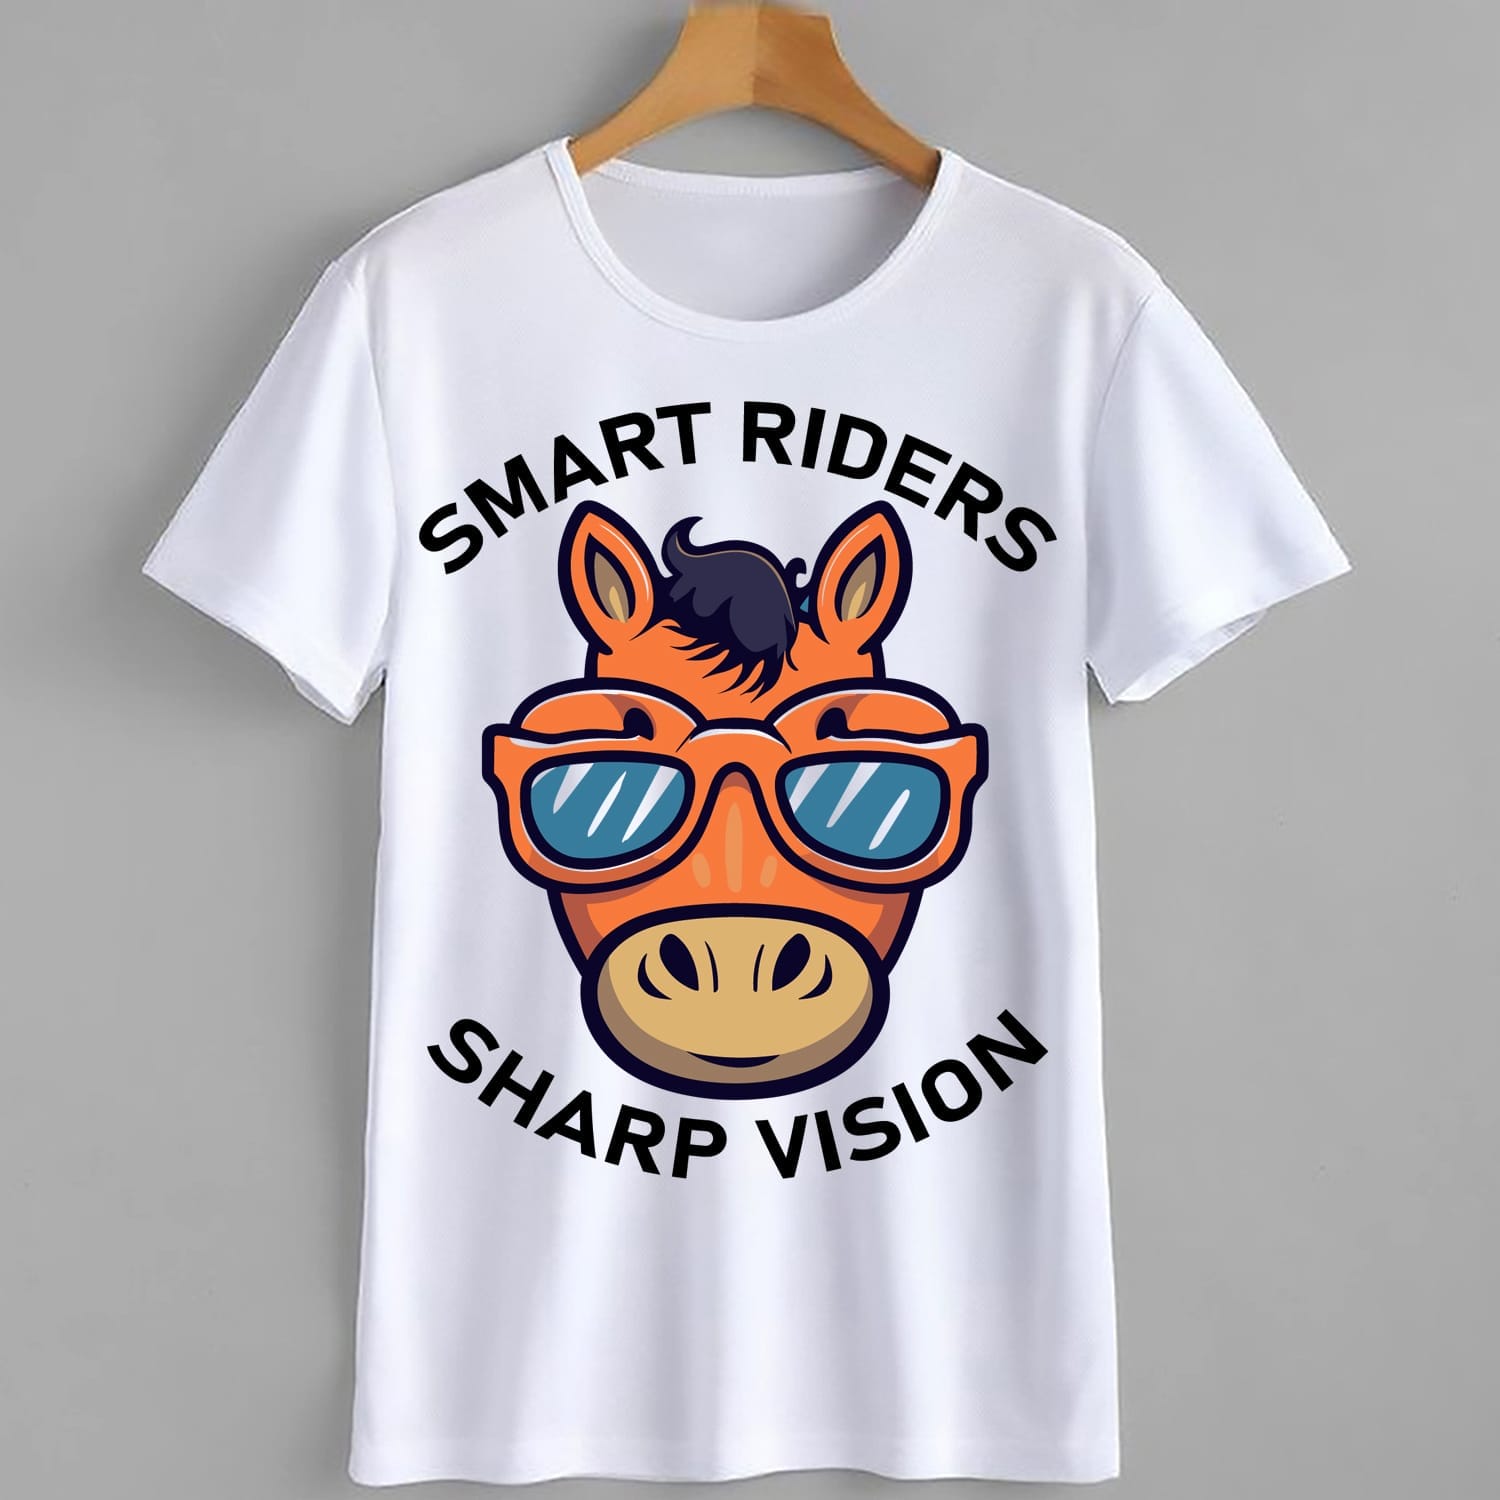 Smart Riders Sharp Vision | Free Horse T-Shirt Design